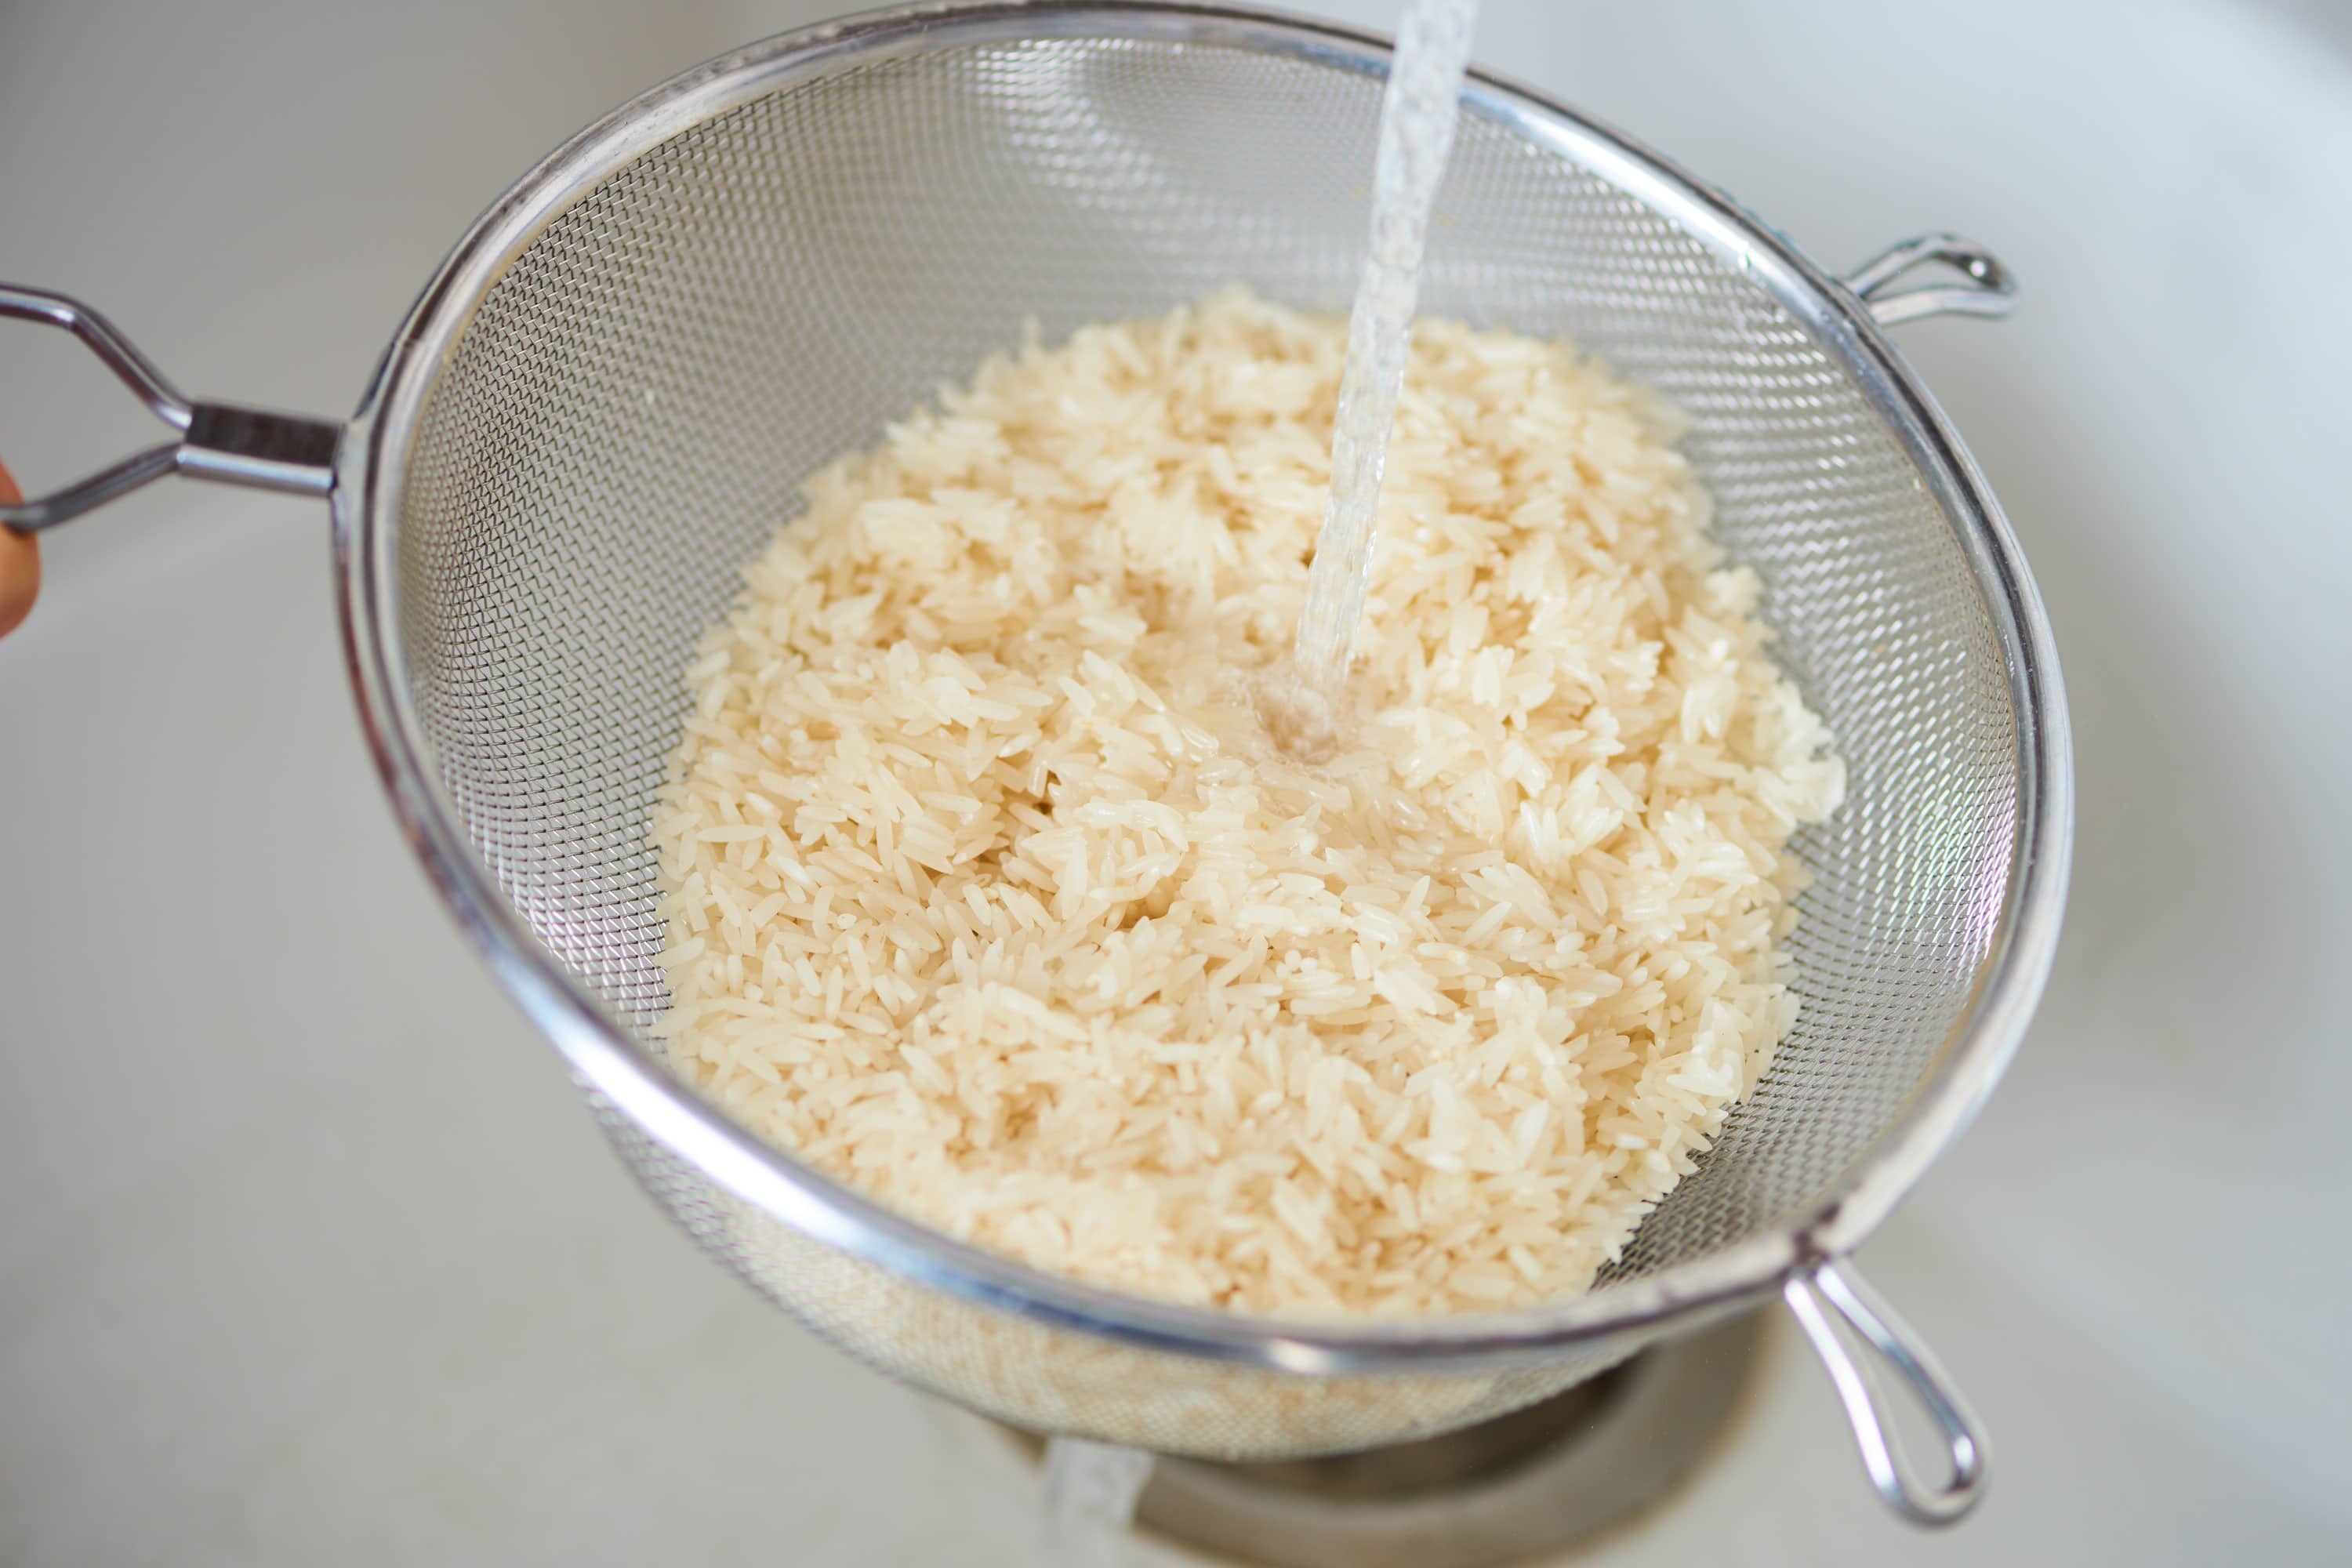 https://cdn.apartmenttherapy.info/image/upload/v1570824497/k/Photo/Recipes/2019-10-how-to-instant-pot-rice/2019-10-04_Kitchn86591_HT-Instant-Pot-Rice.jpg